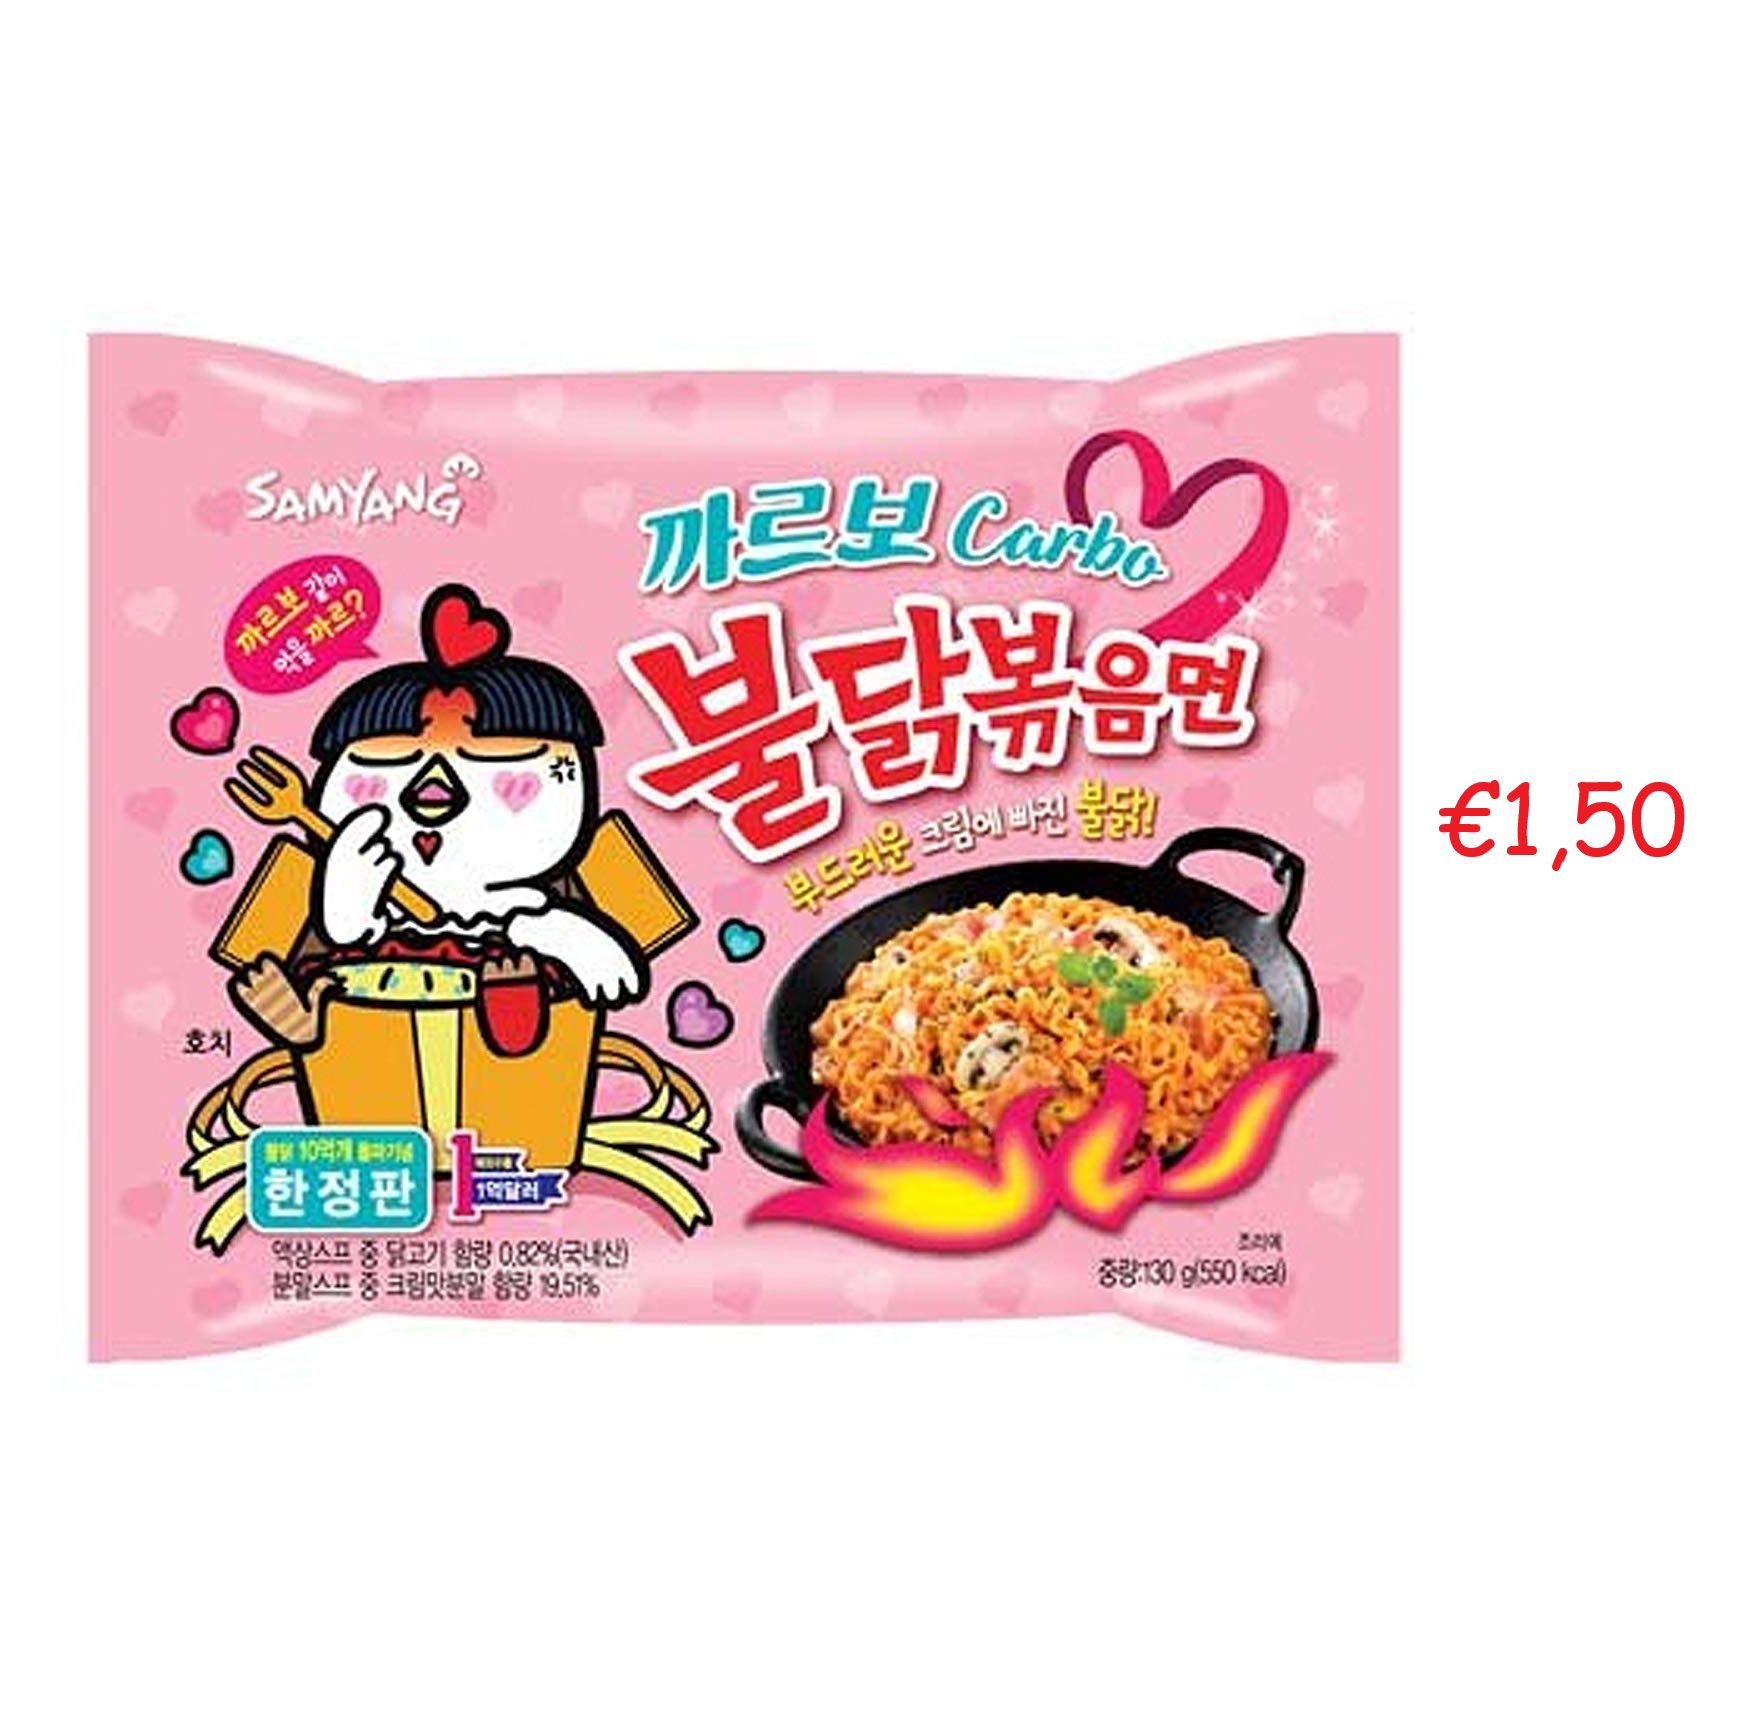 Samyang Hot chicken carbo flavor ramen